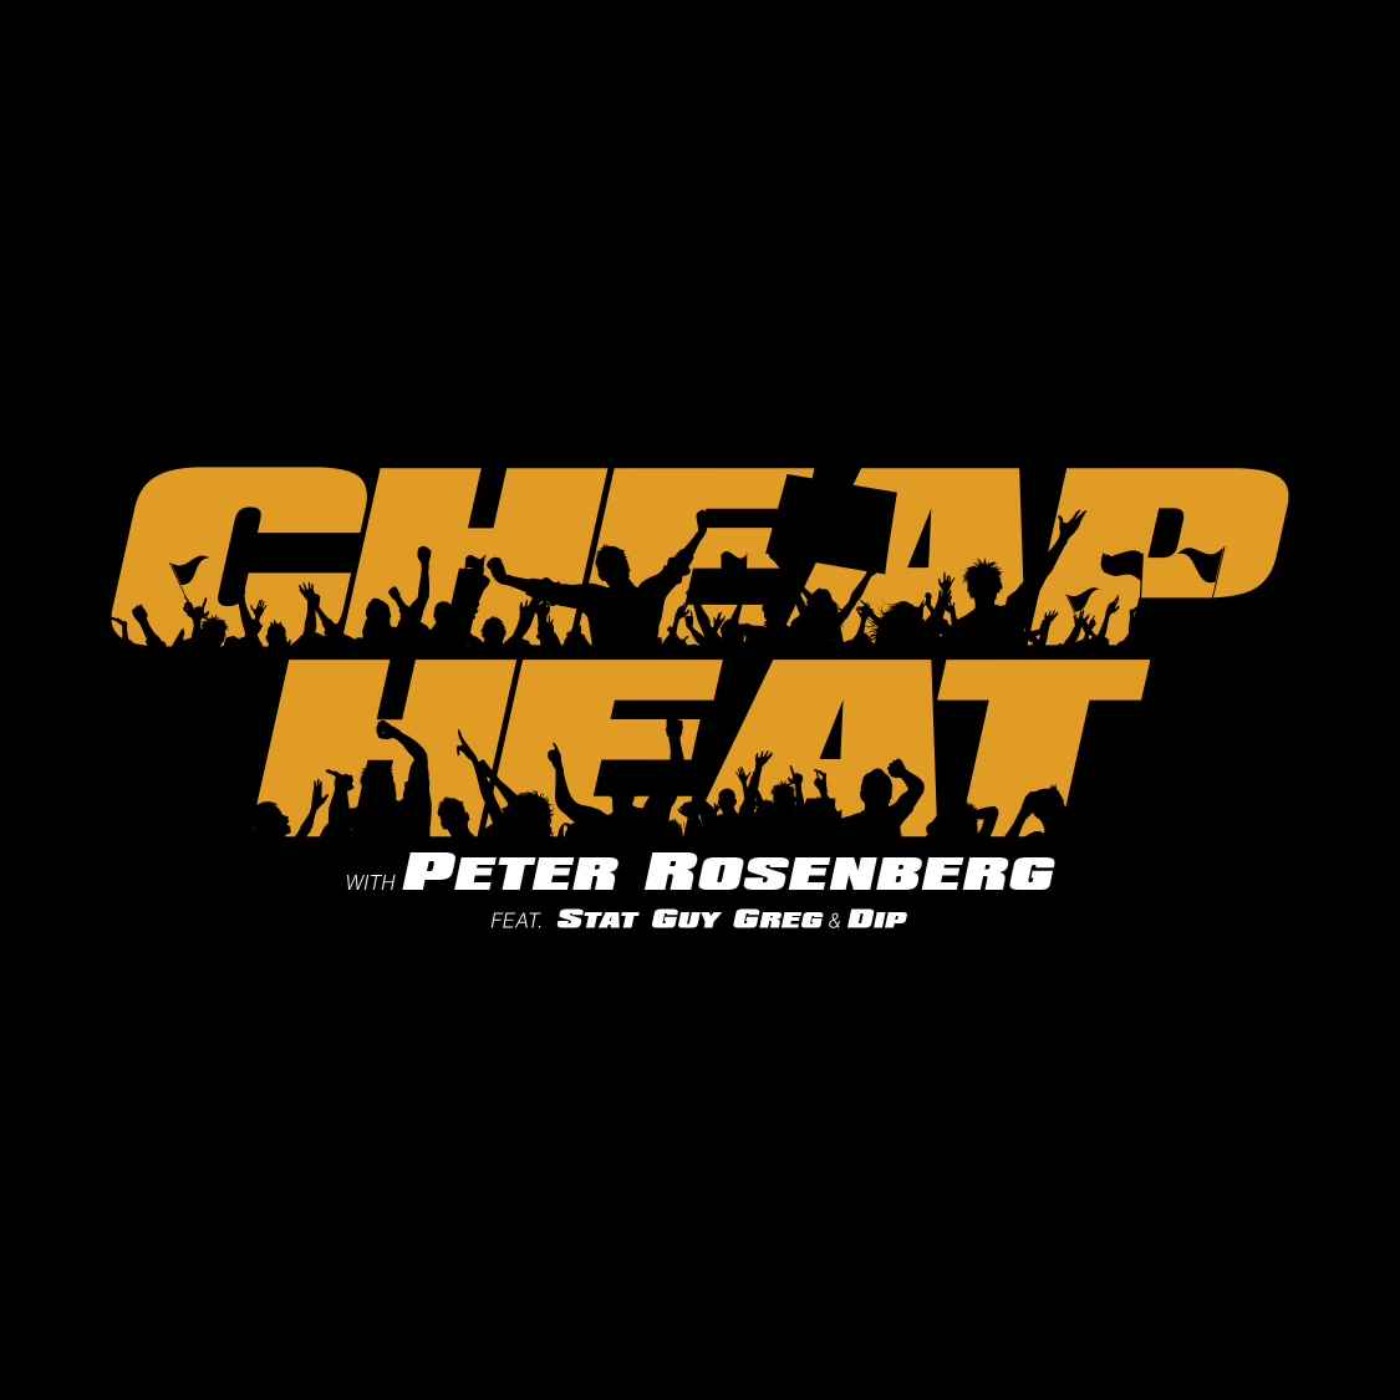 Cheap Heat with Peter Rosenberg